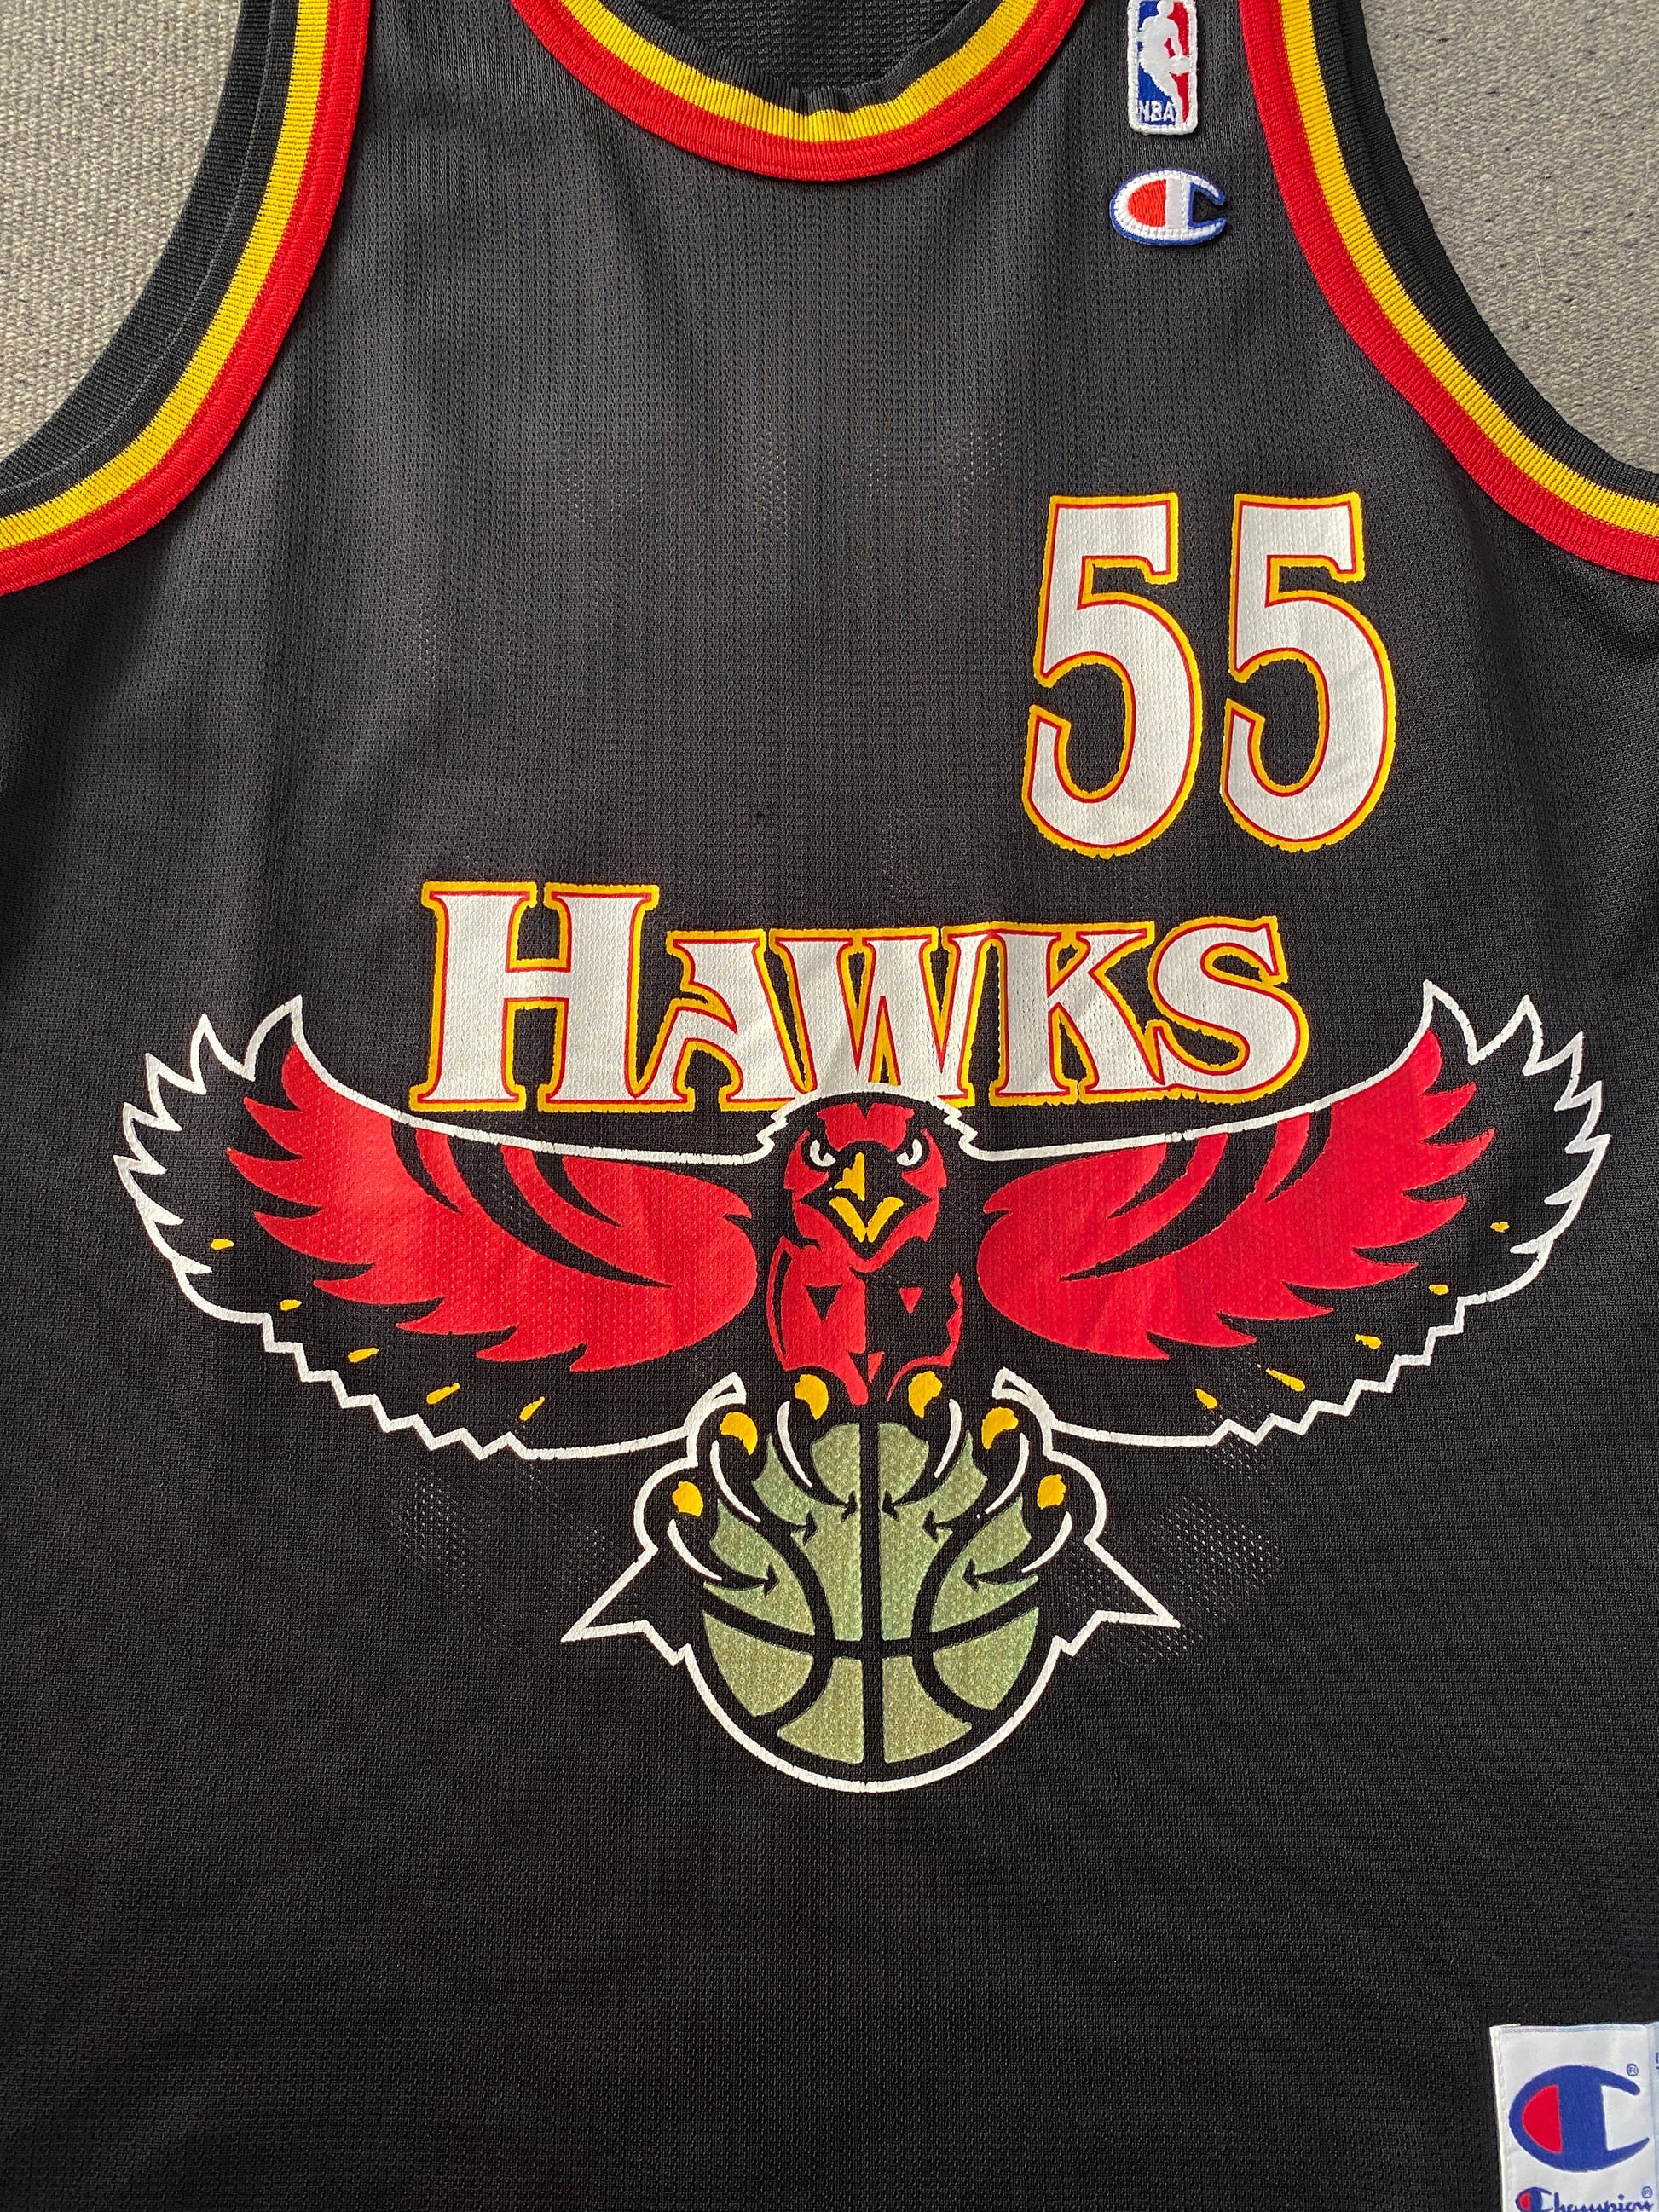 Authentic 90s Vintage NBA Jersey - #55 Dikembe Mutombo Hawks - Size 40, Made by Champion